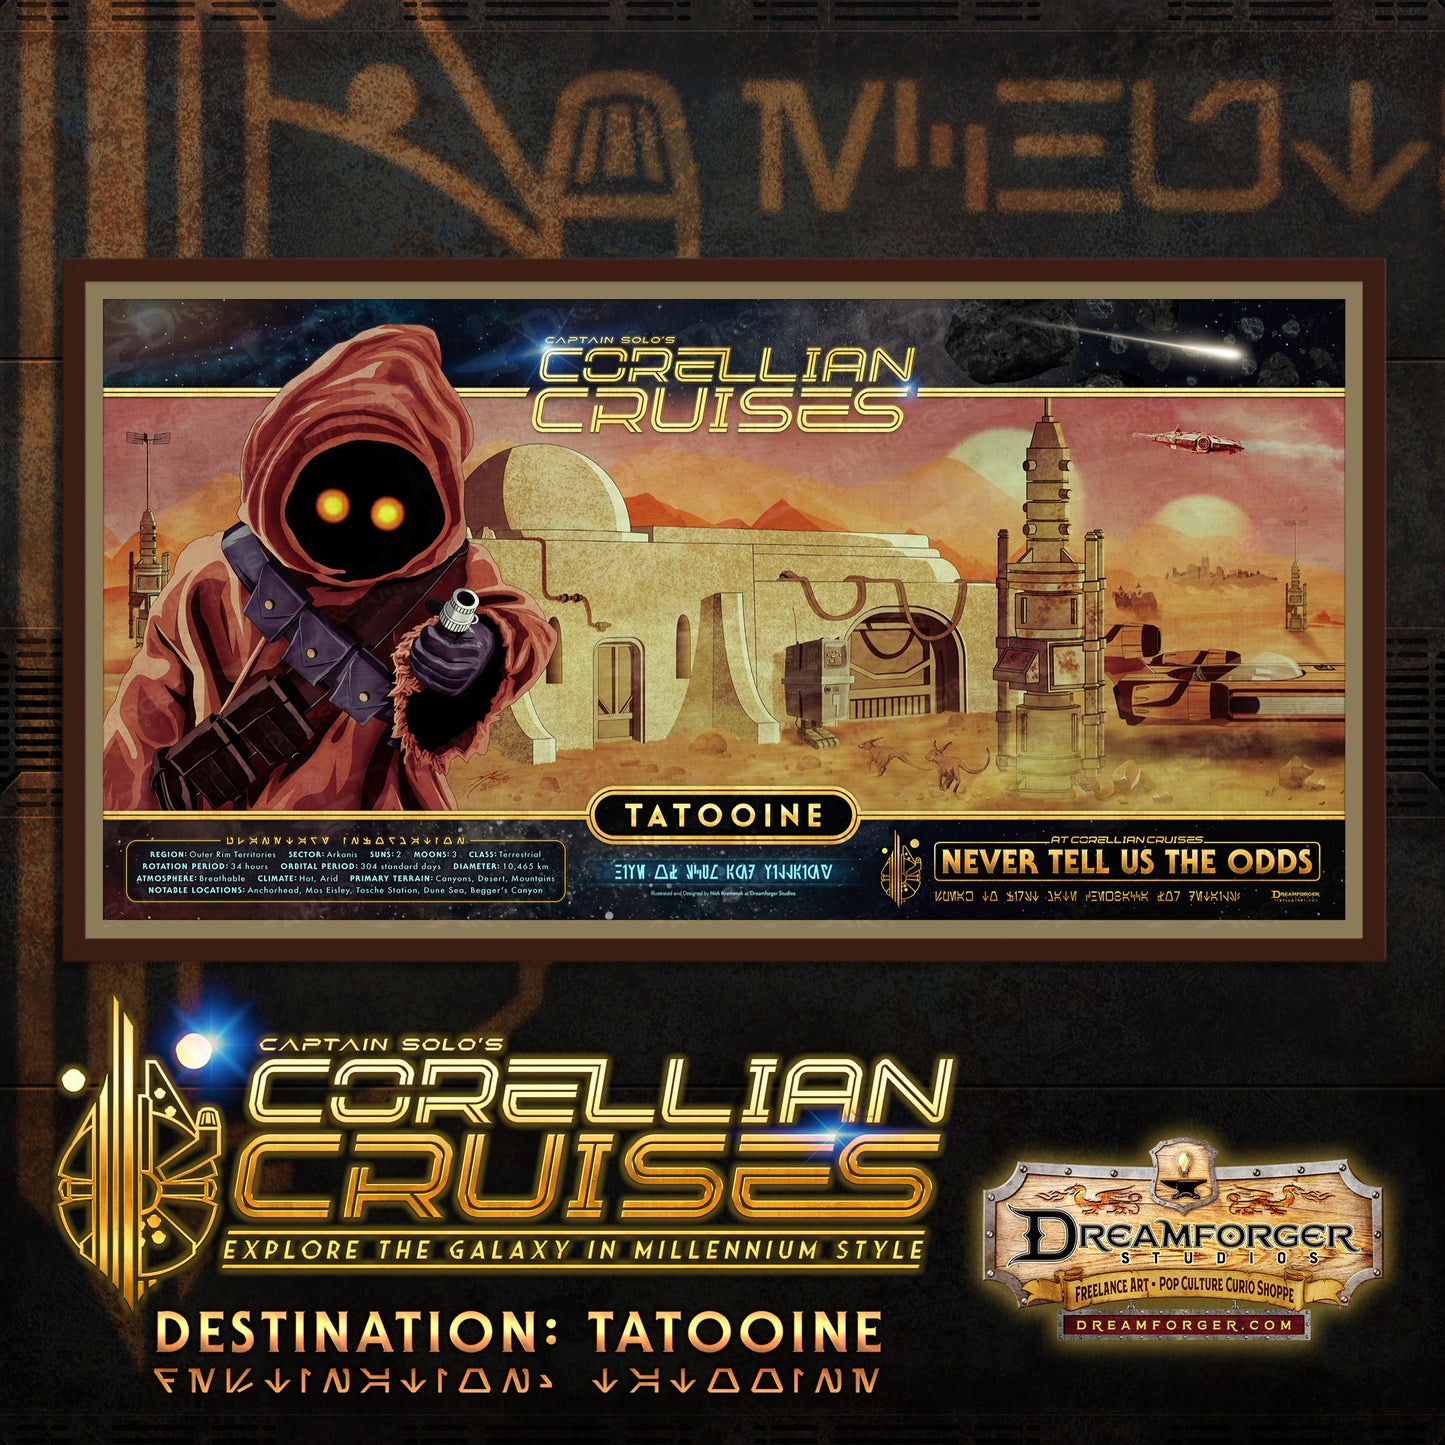 "Capt. Solo's Corellian Cruises - Destination: Tatooine" Panoramic Travel Poster